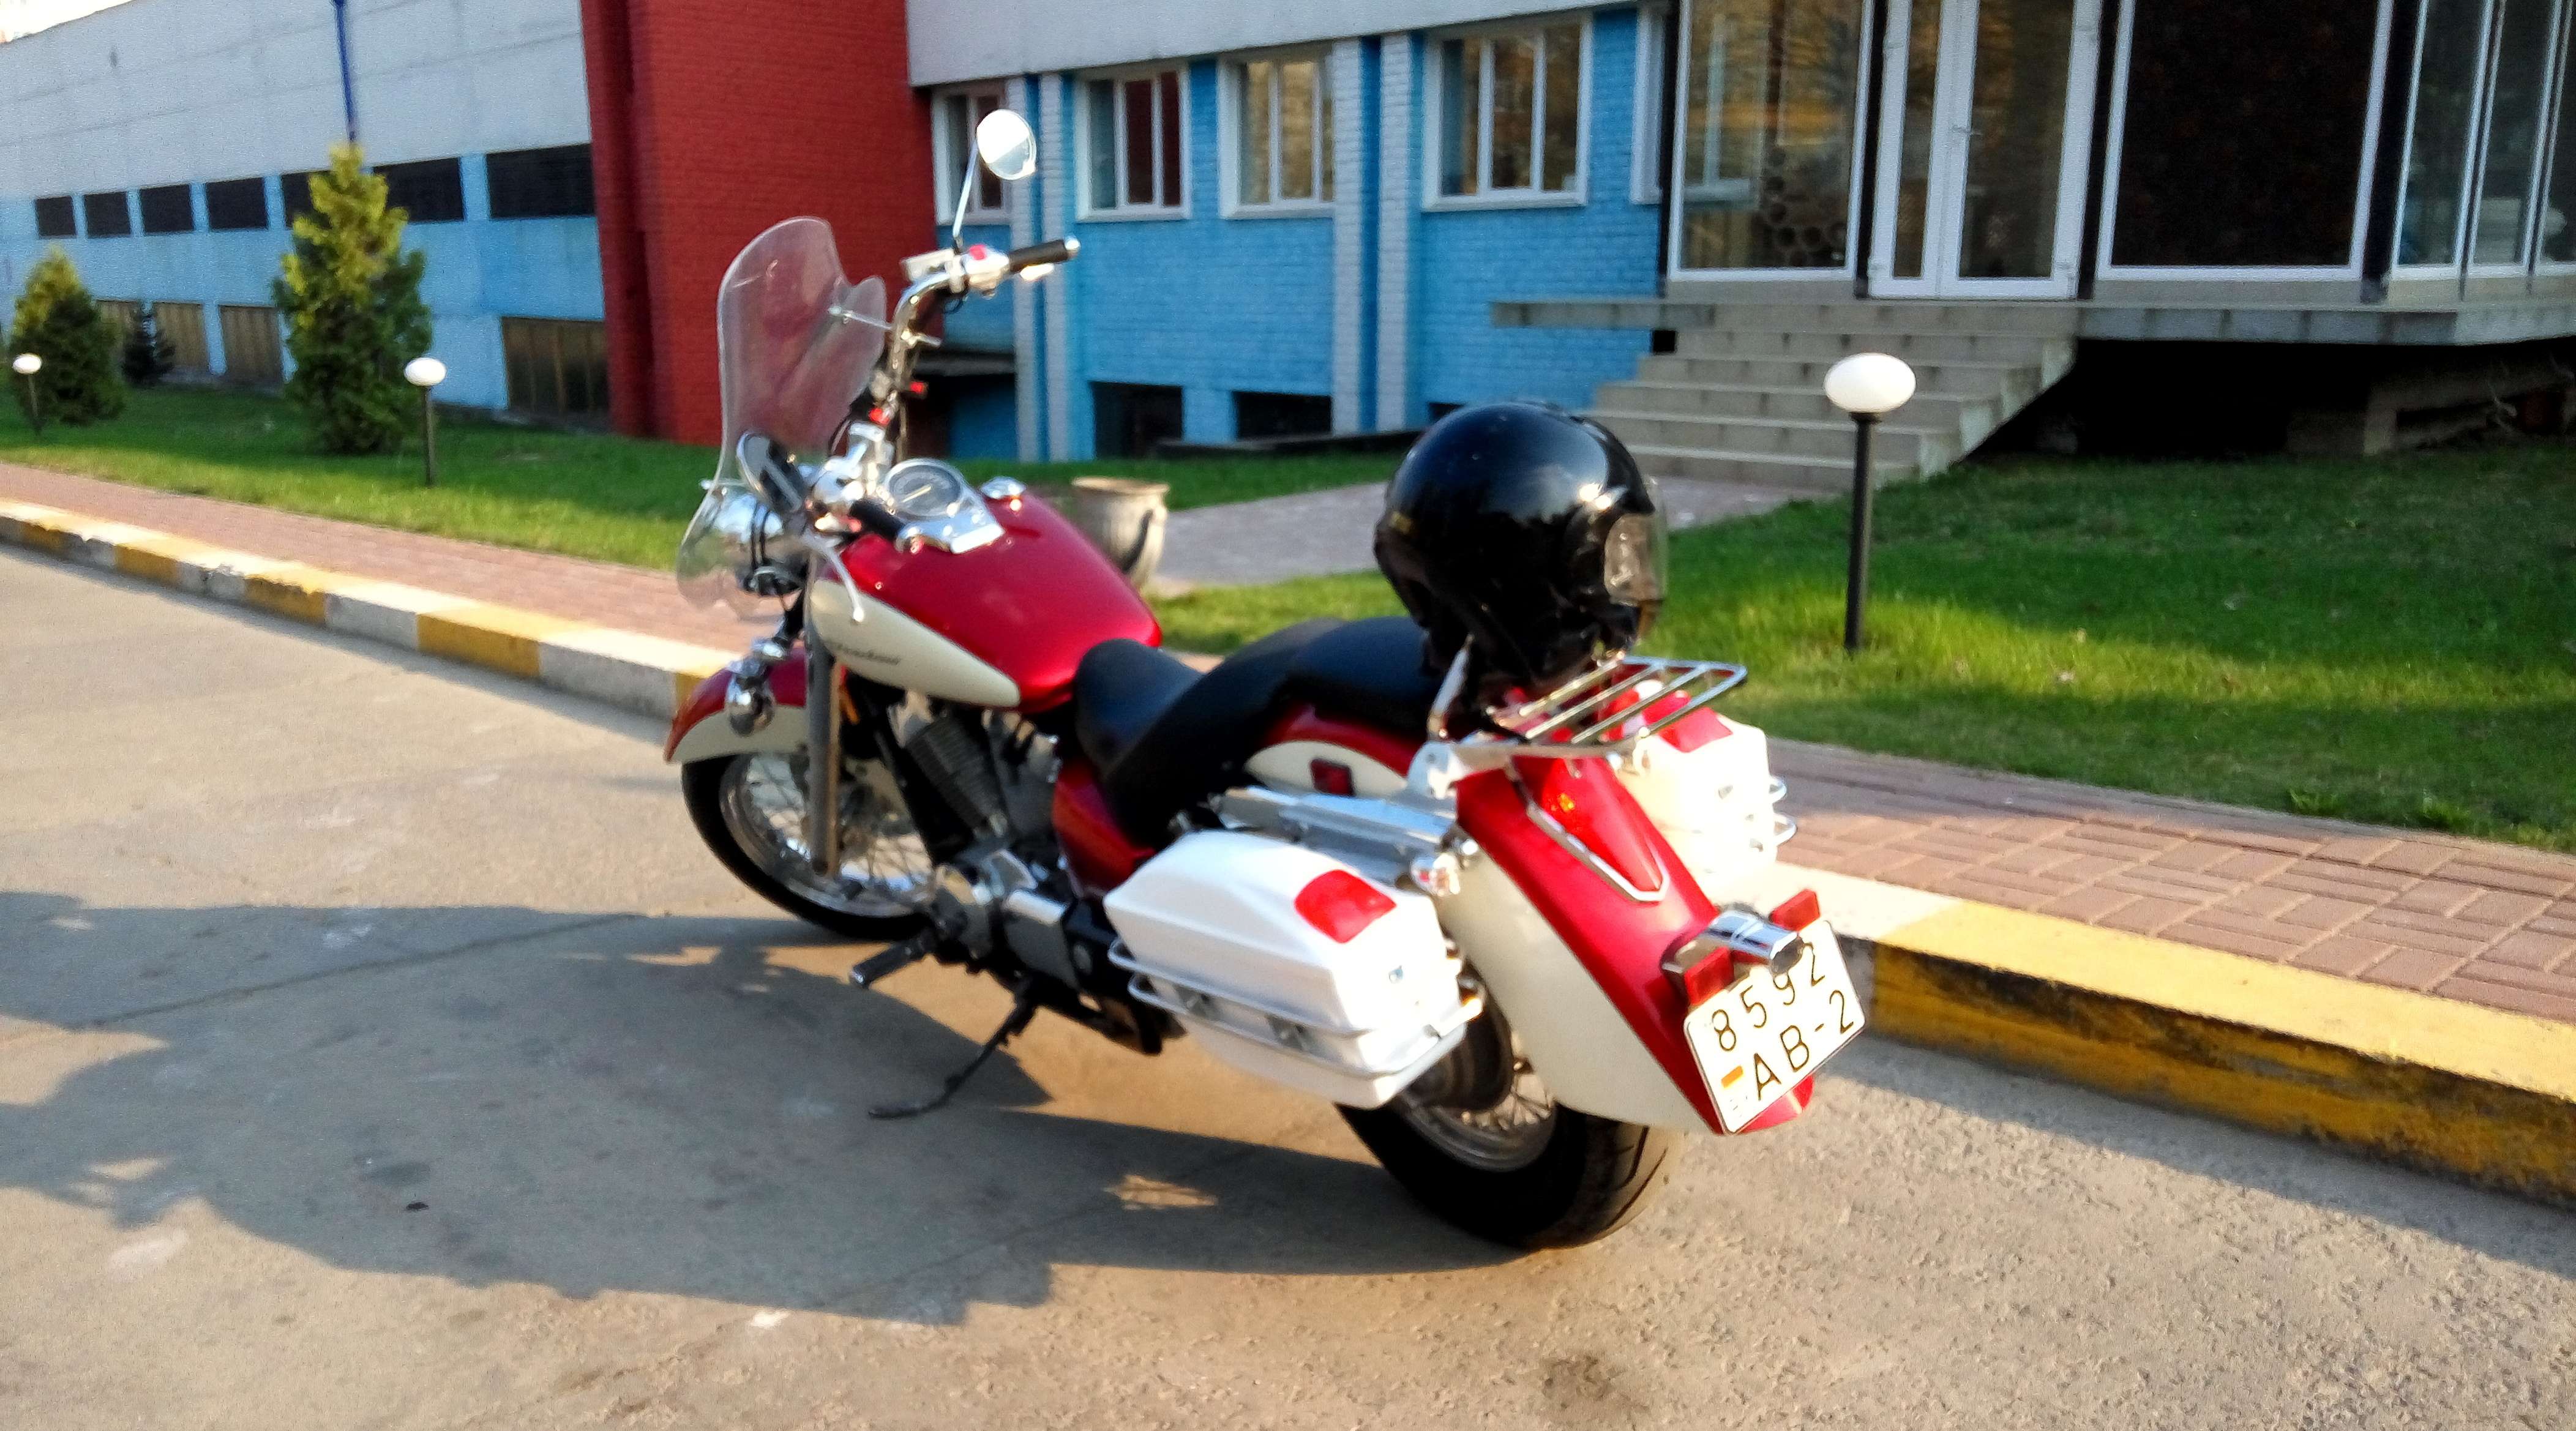 Купить мотоцикл Honda VT в Беларуси в кредит - цены, характеристики, фото. в Беларуси в кредит